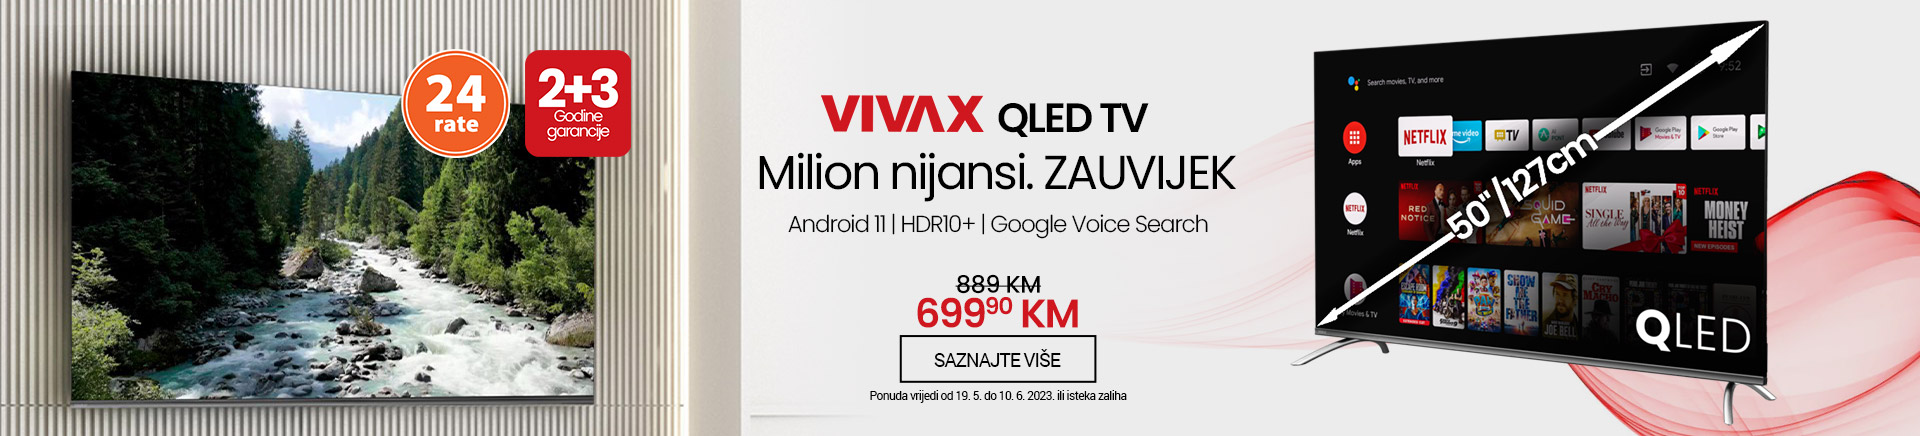 BA Vivax Qled TV TABLET 768 X 436.jpg